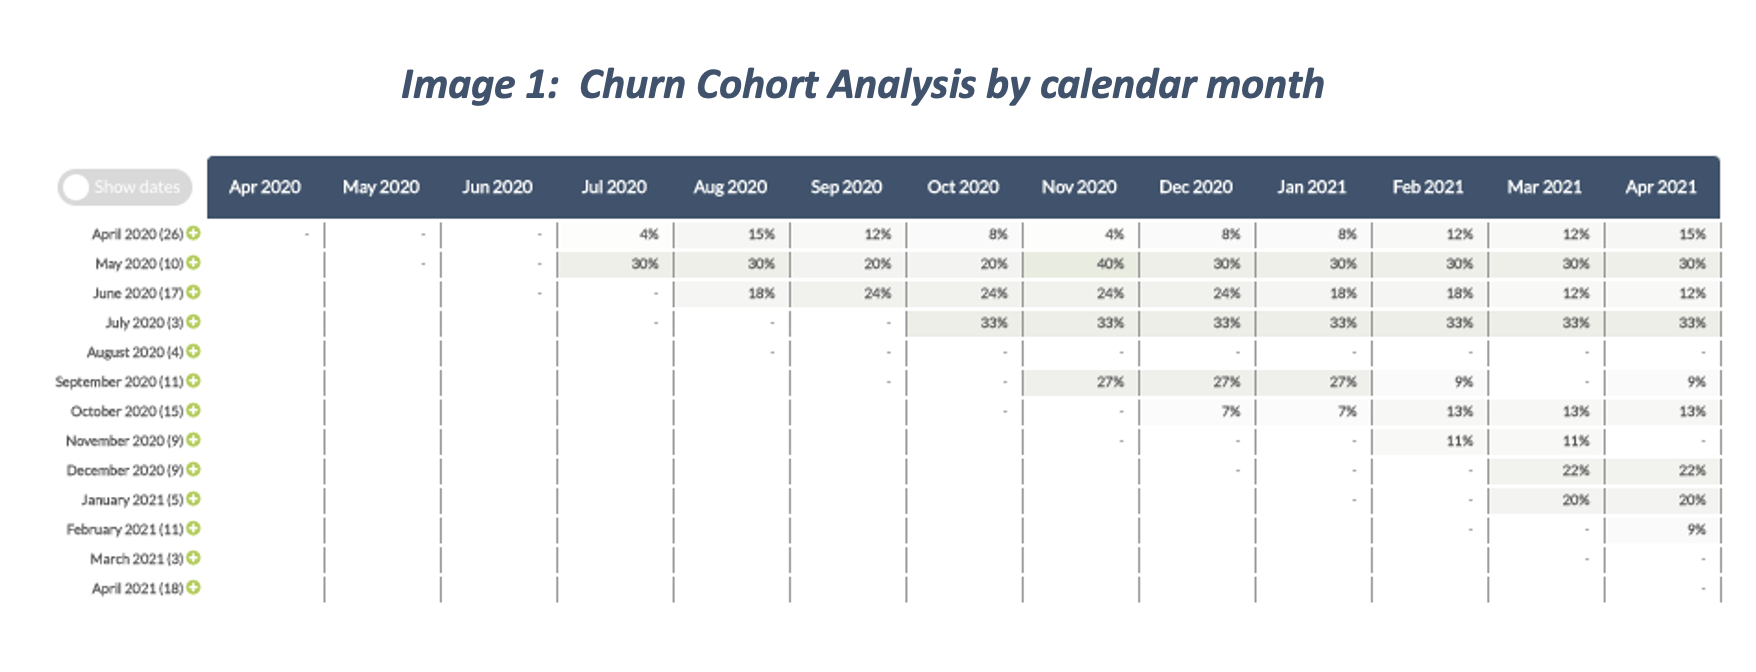 Churn Cohort Analysis by calendar month